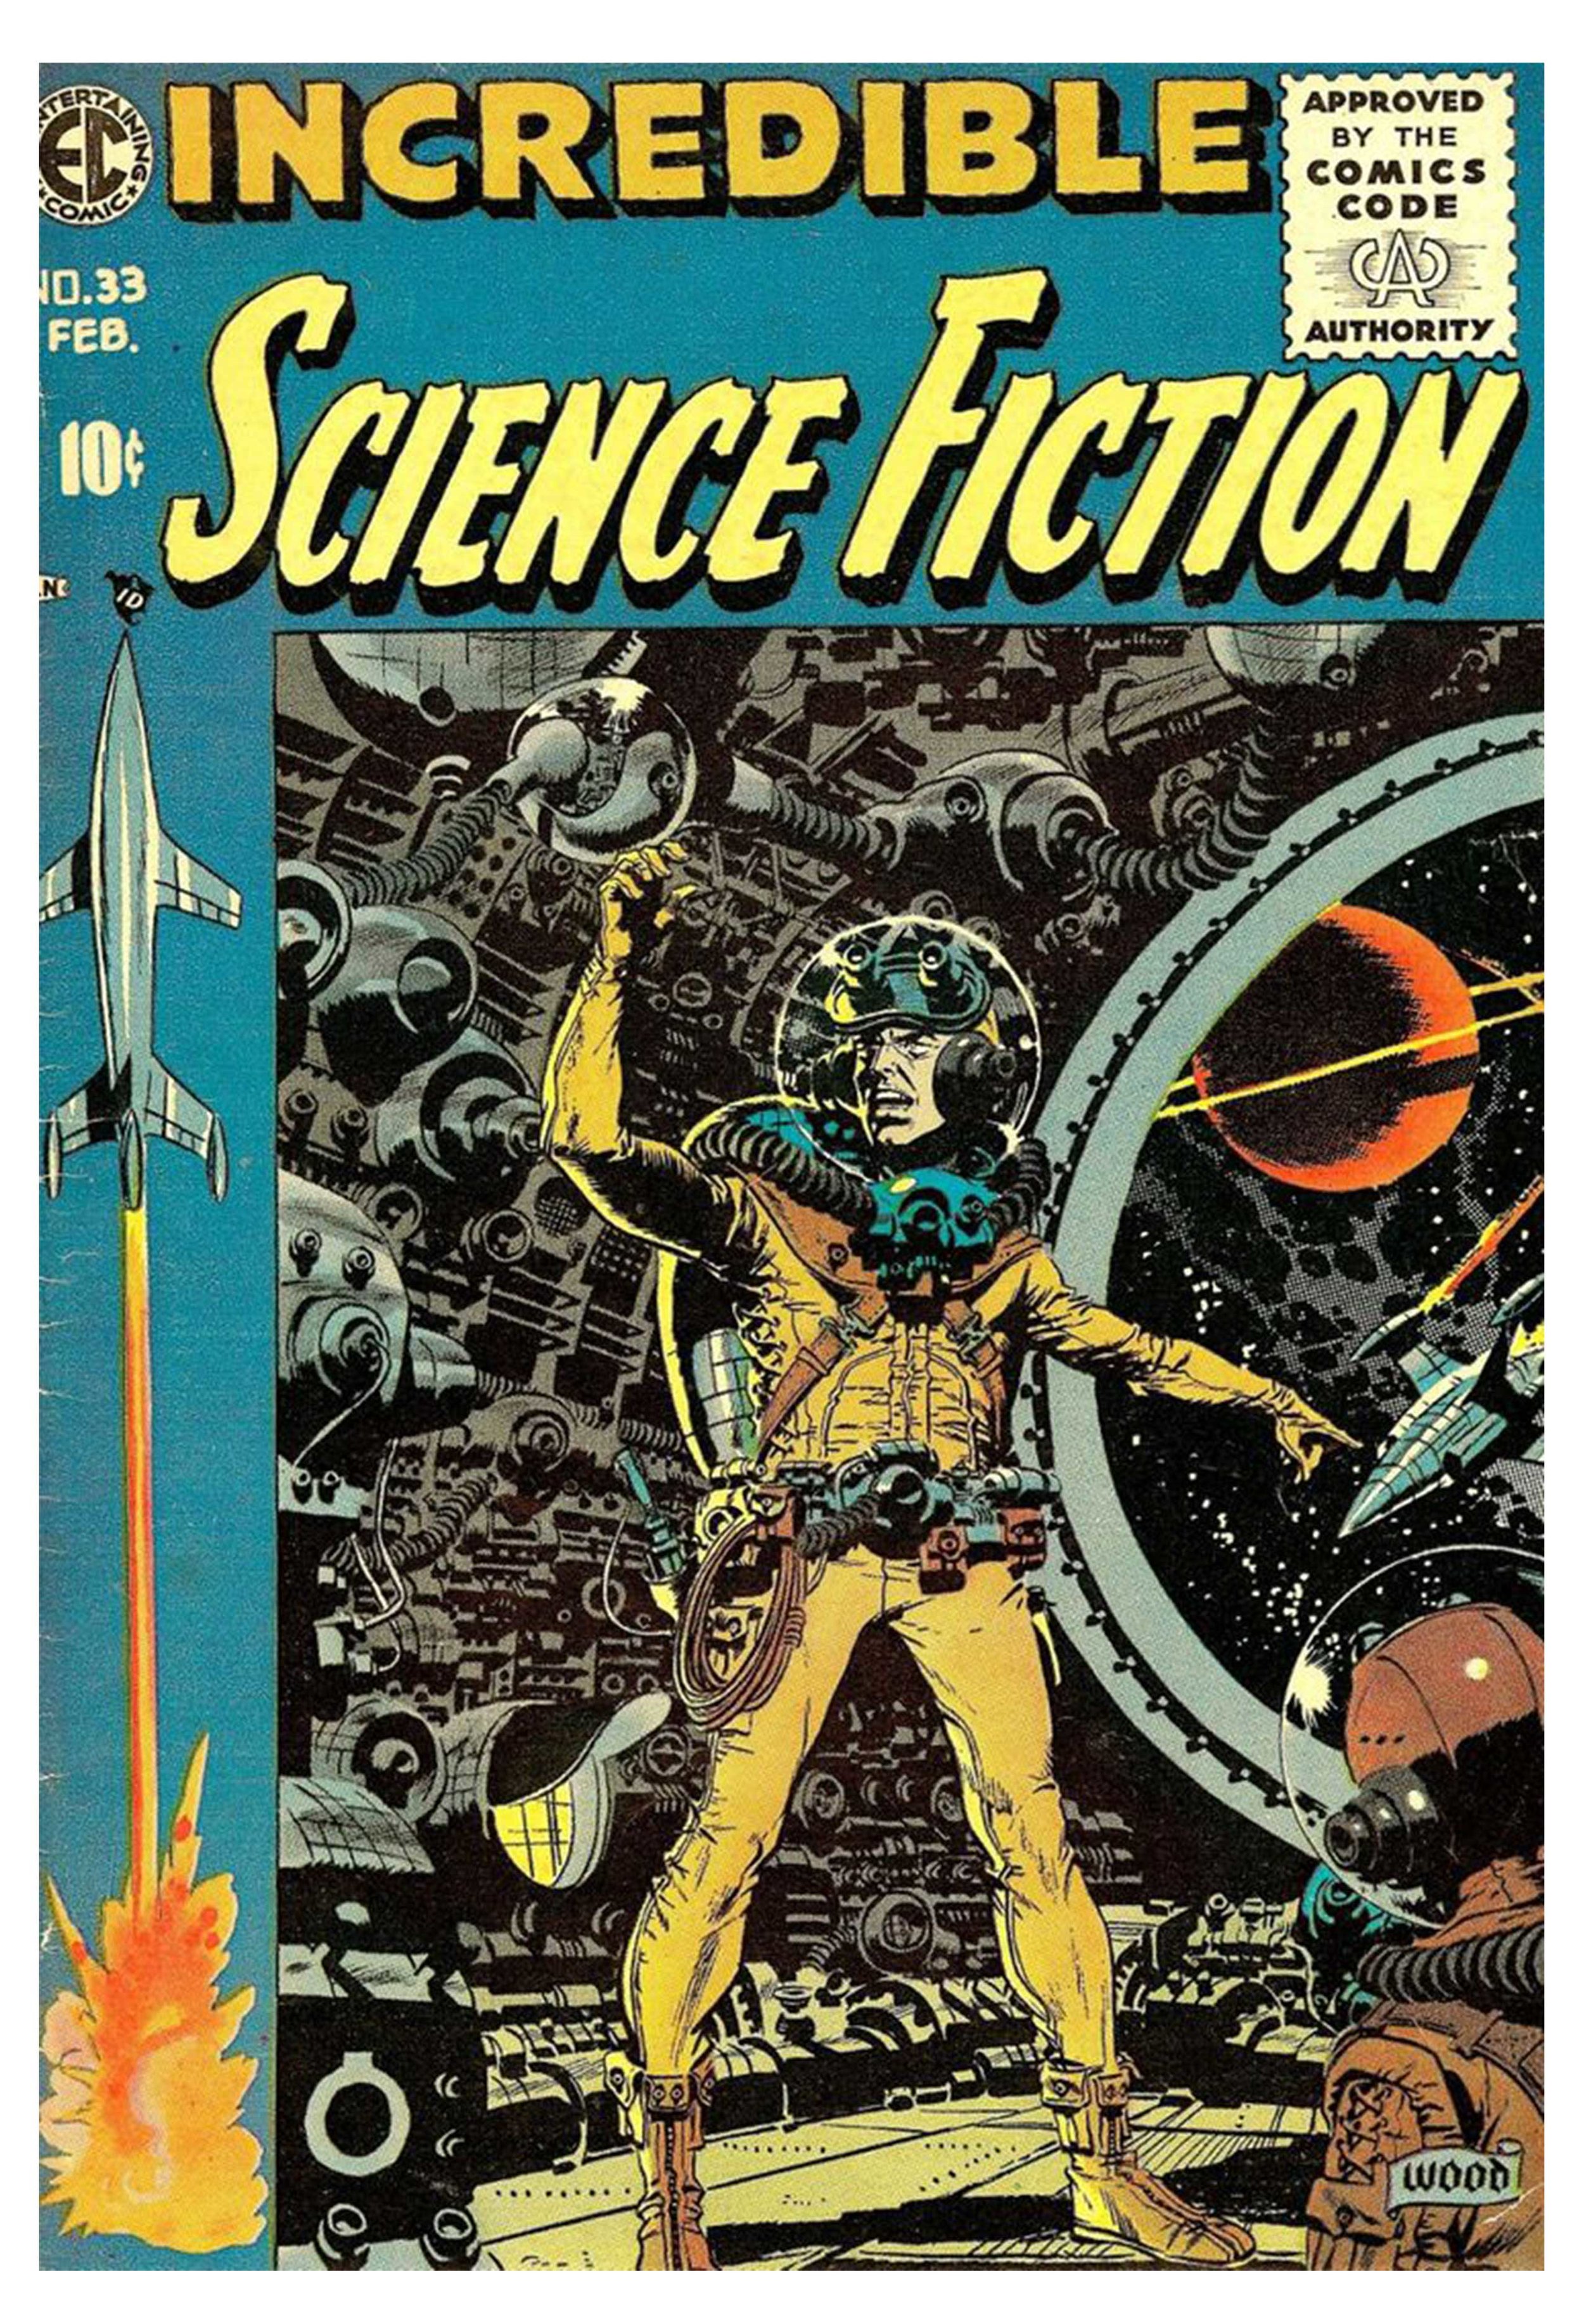 Incredible-Science-Fiction.jpg